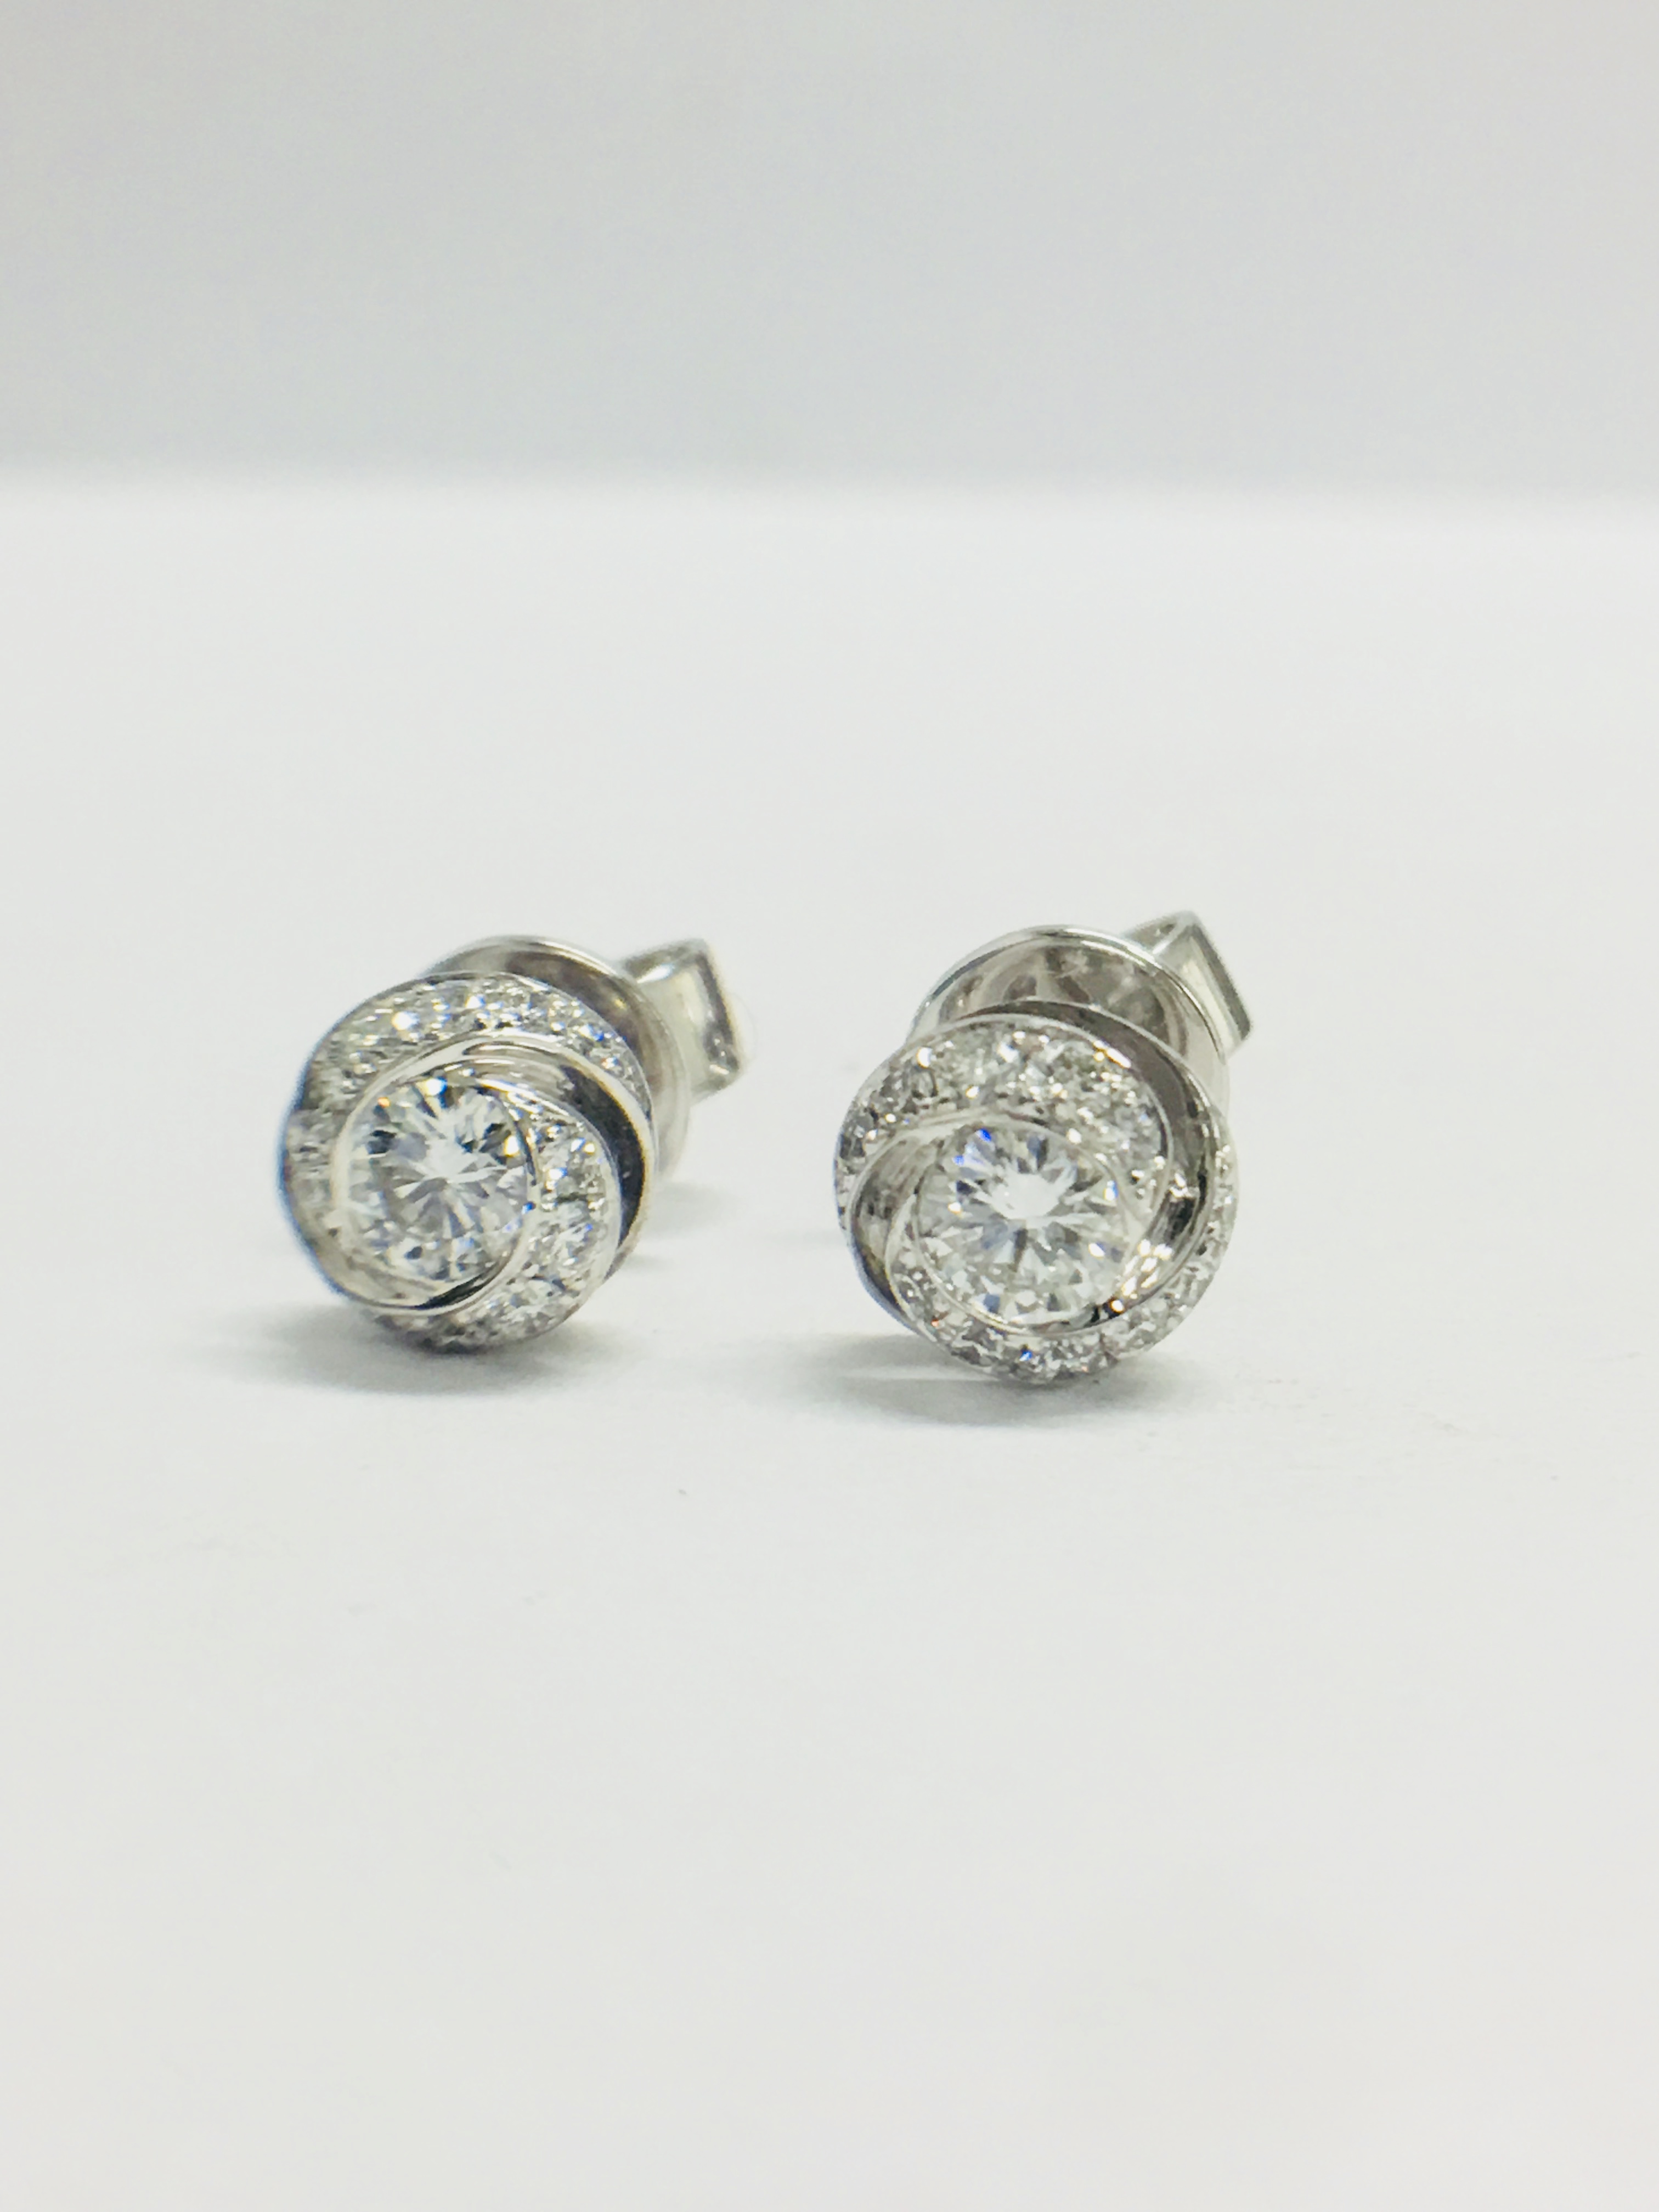 18ct diamond Stud Earrings ,diamonds are GH colour